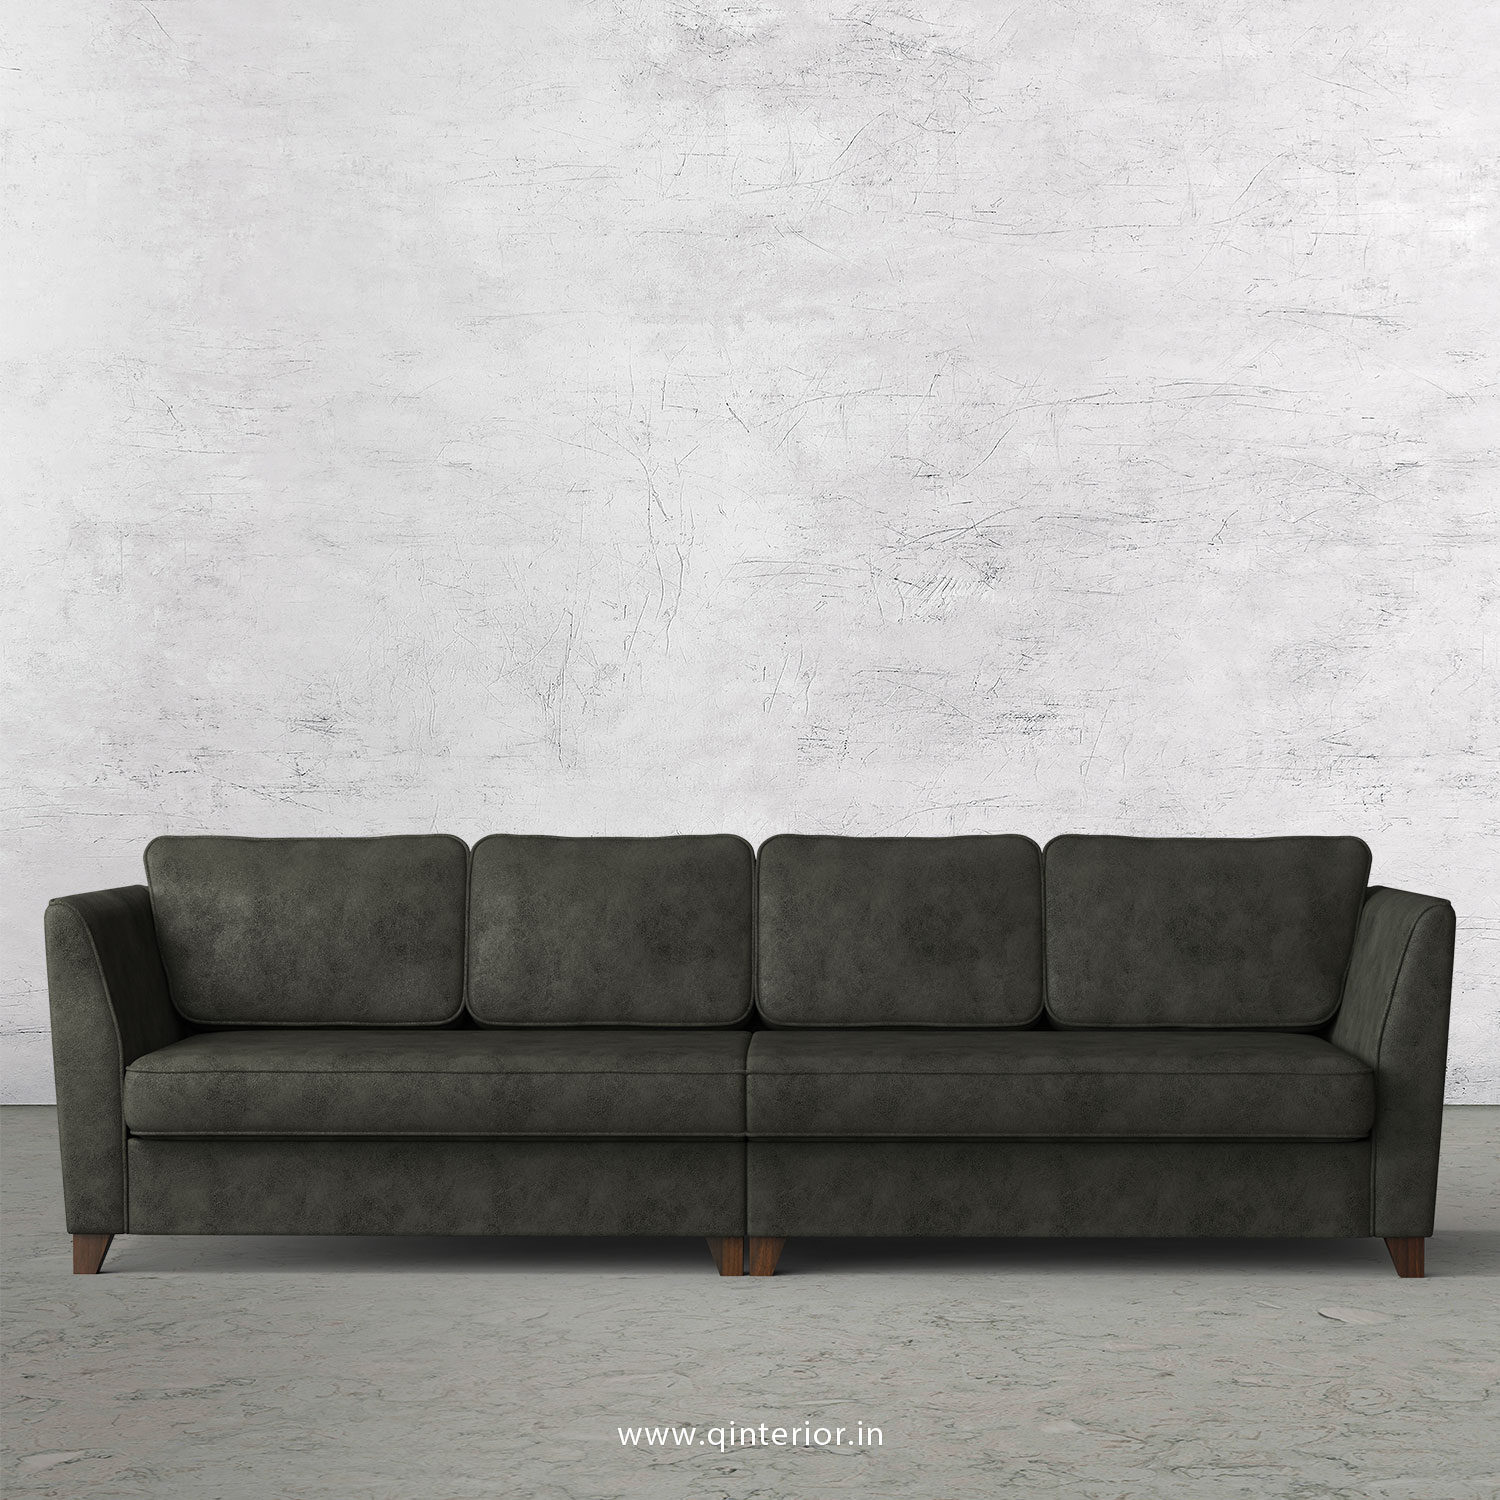 Kingstone 4 Seater Sofa in Fab Leather Fabric - SFA004 FL07